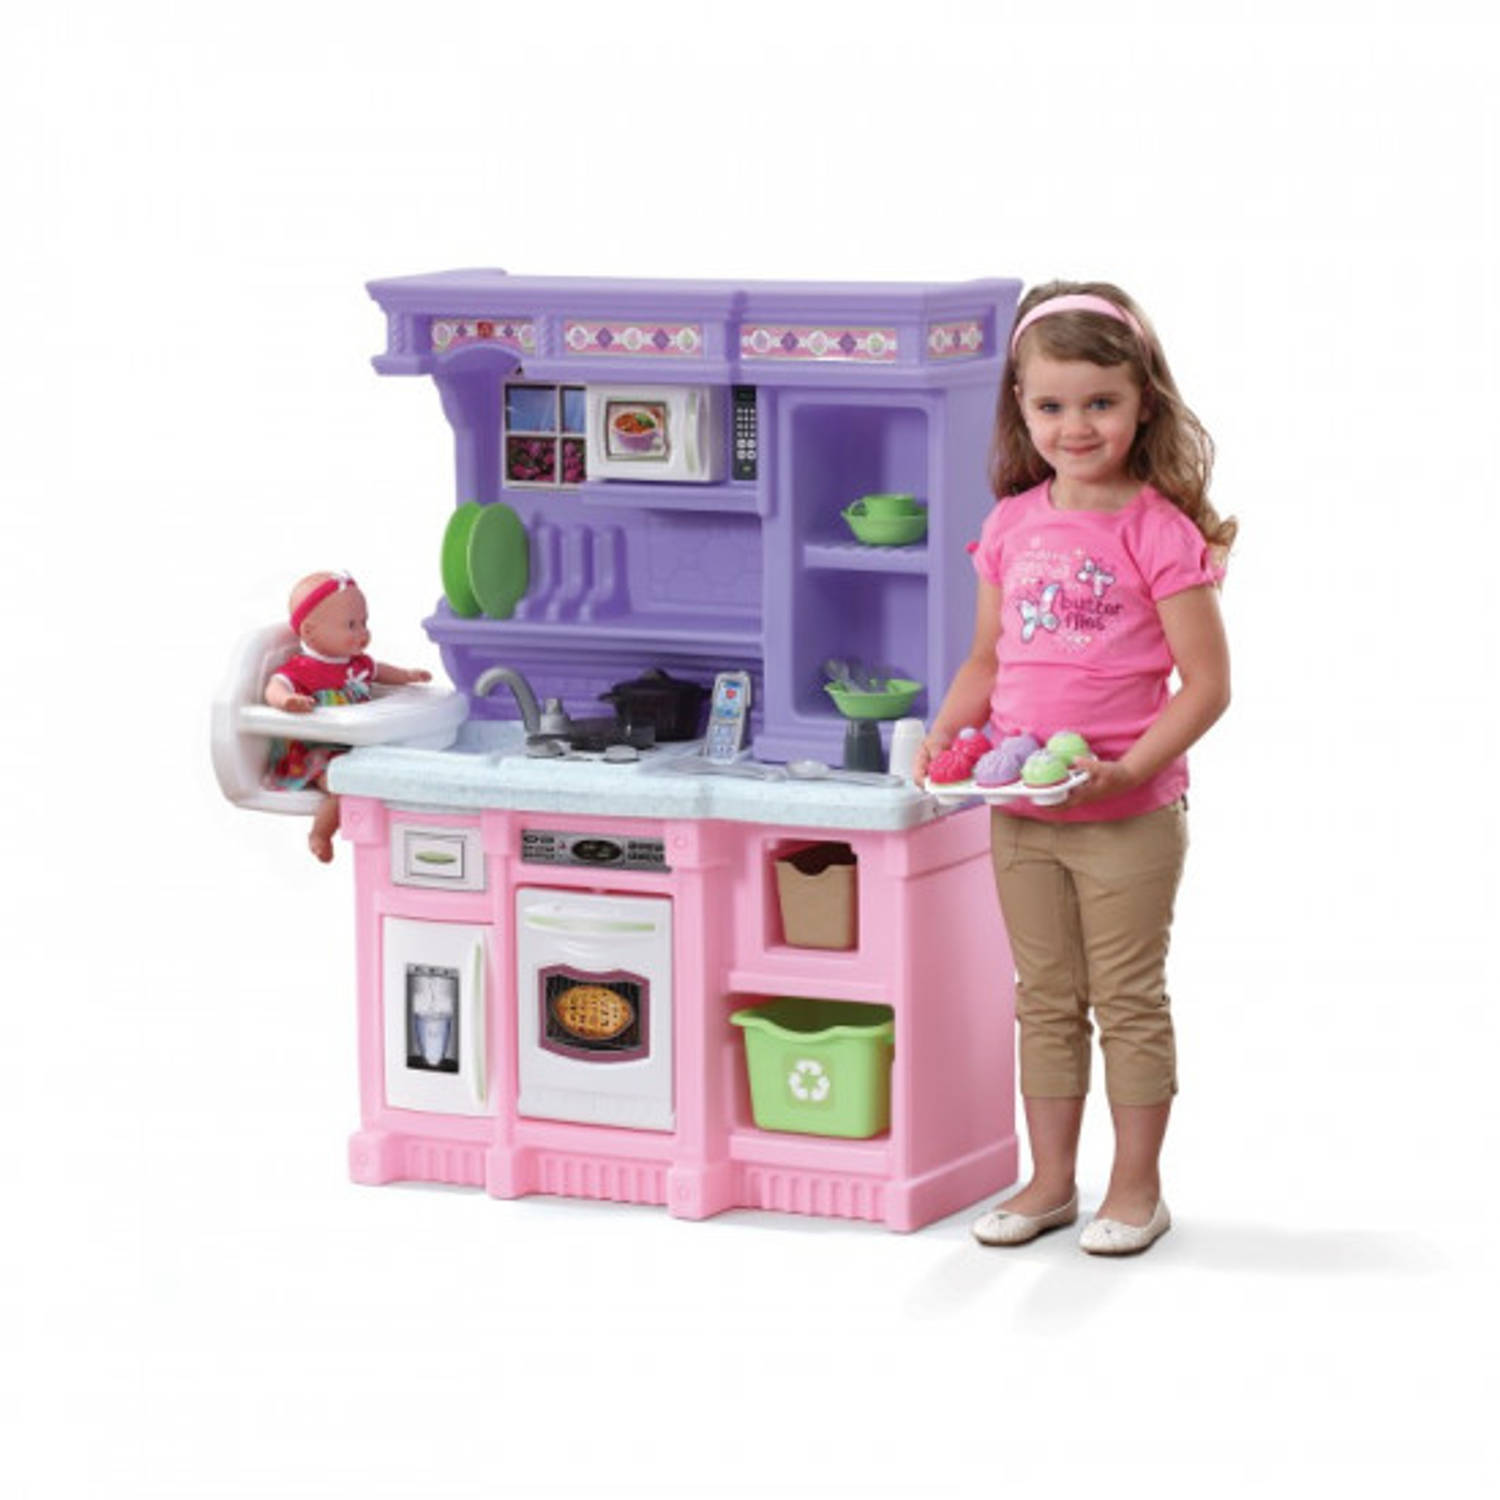 Step2 kleine bakker speelgoedkeuken 105 cm roze-paars